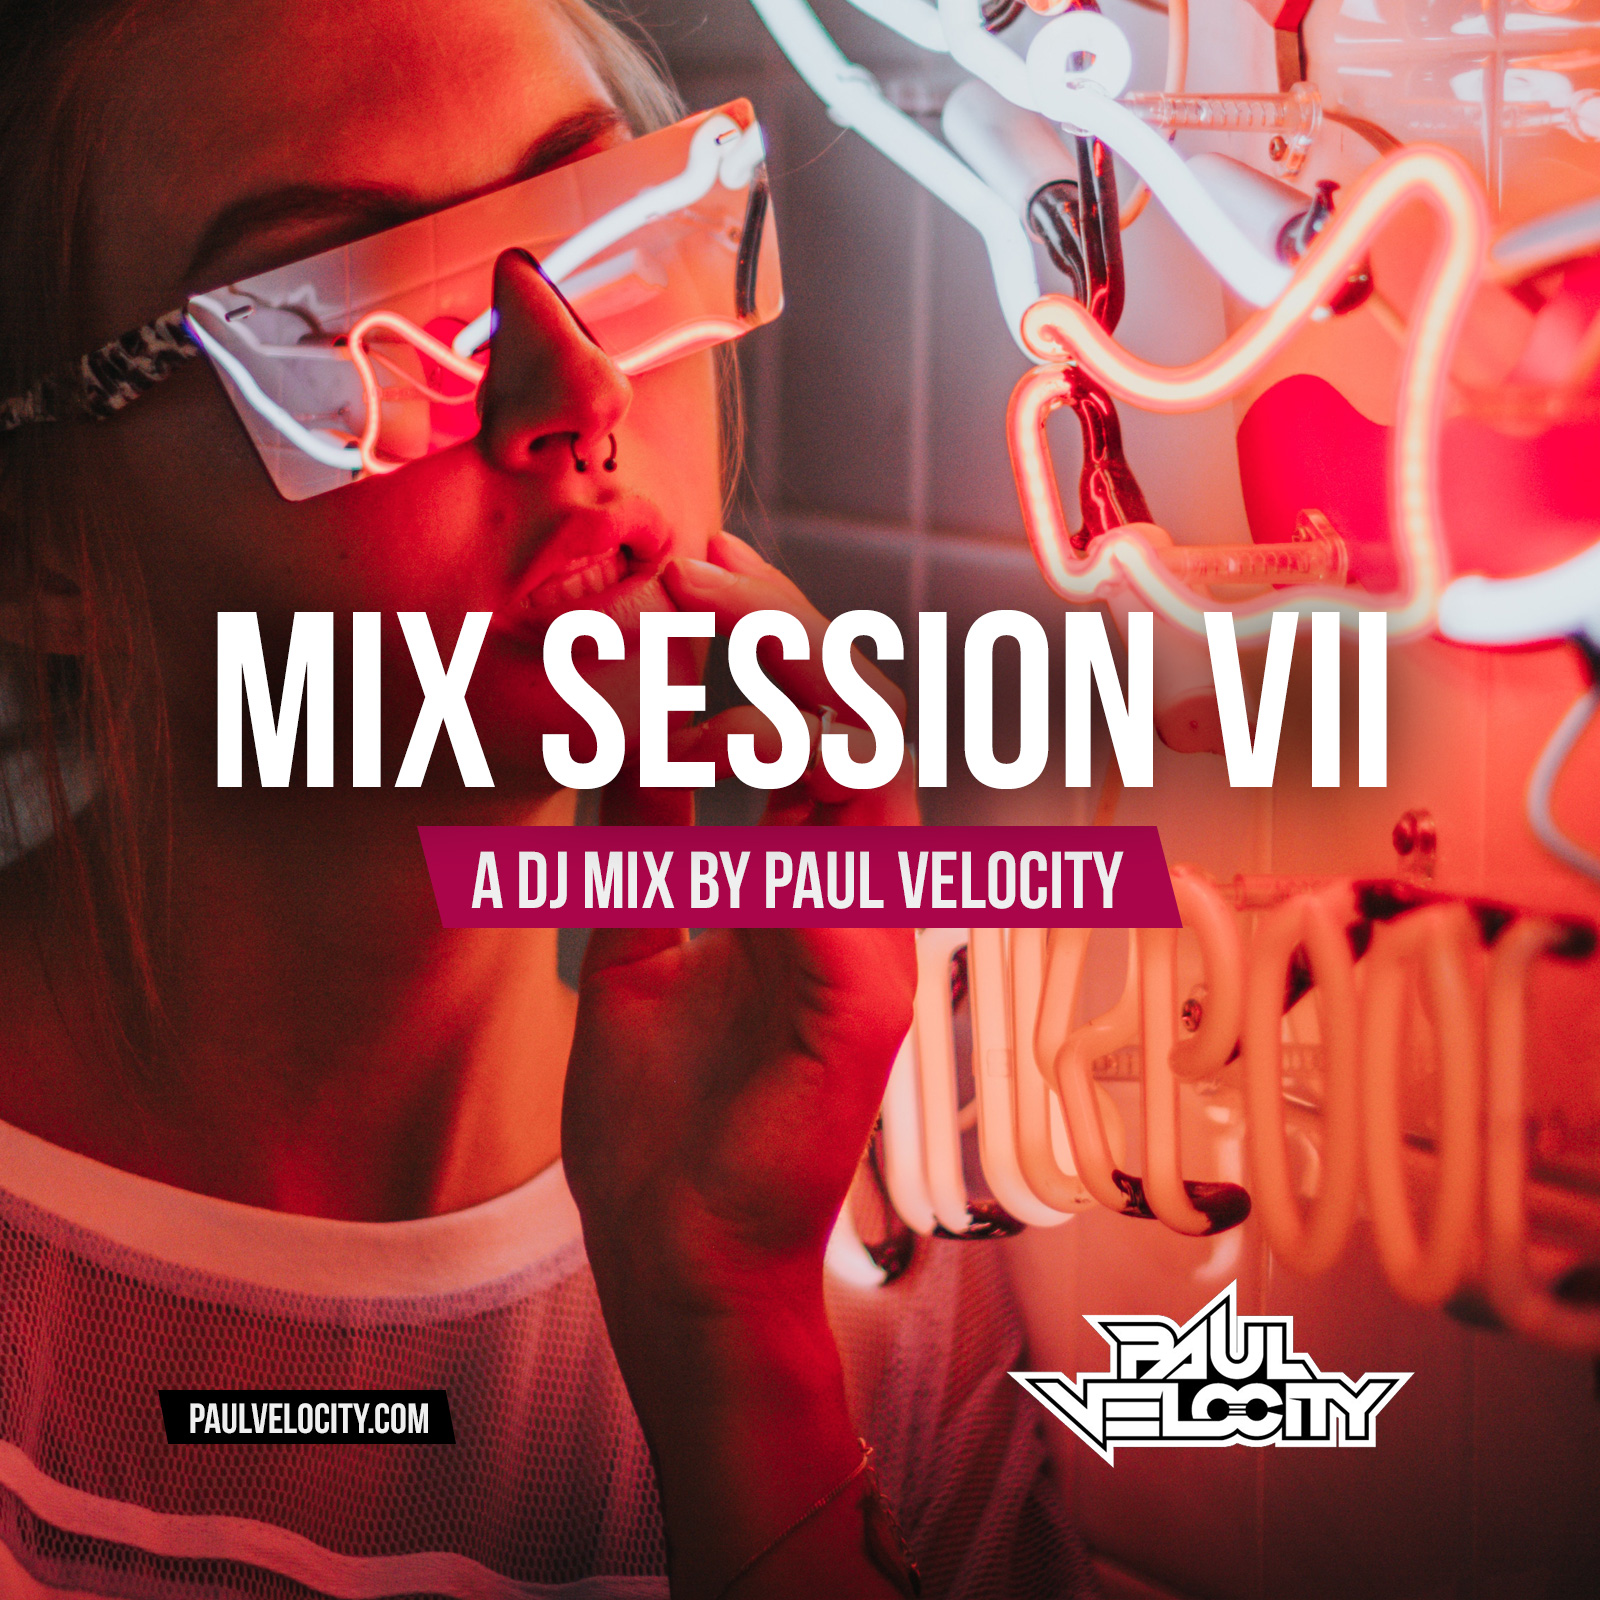 Mix Session VII